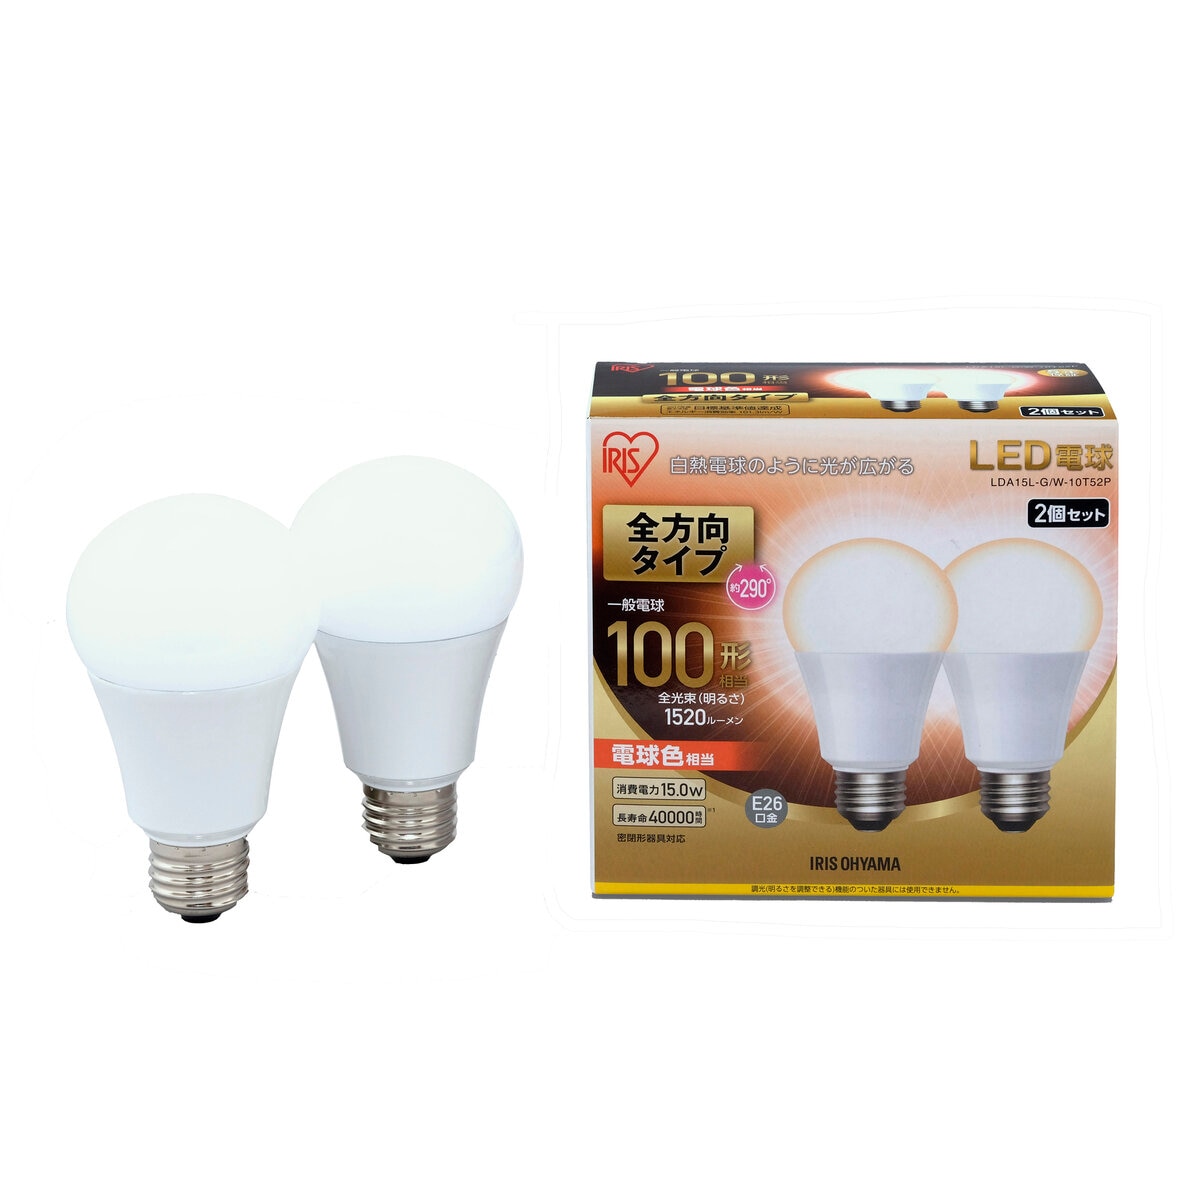 IRIS OHYAMA LED Bulb E26 100W 2pack